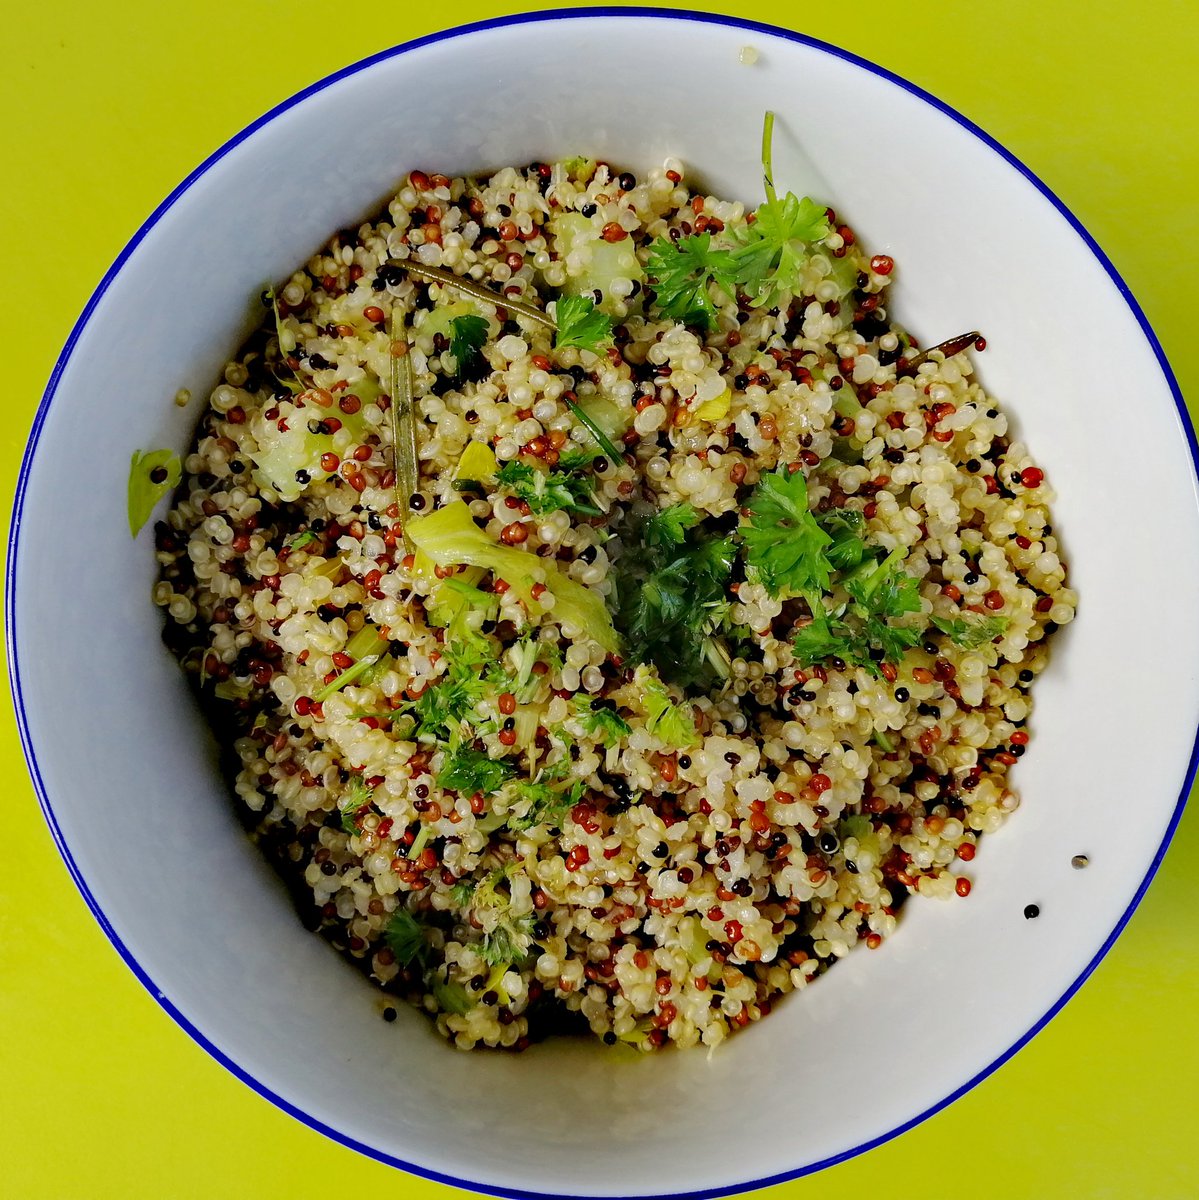 Saucy little #salad #Quinoa #pistachio & #celery #makeyourown #noaditives